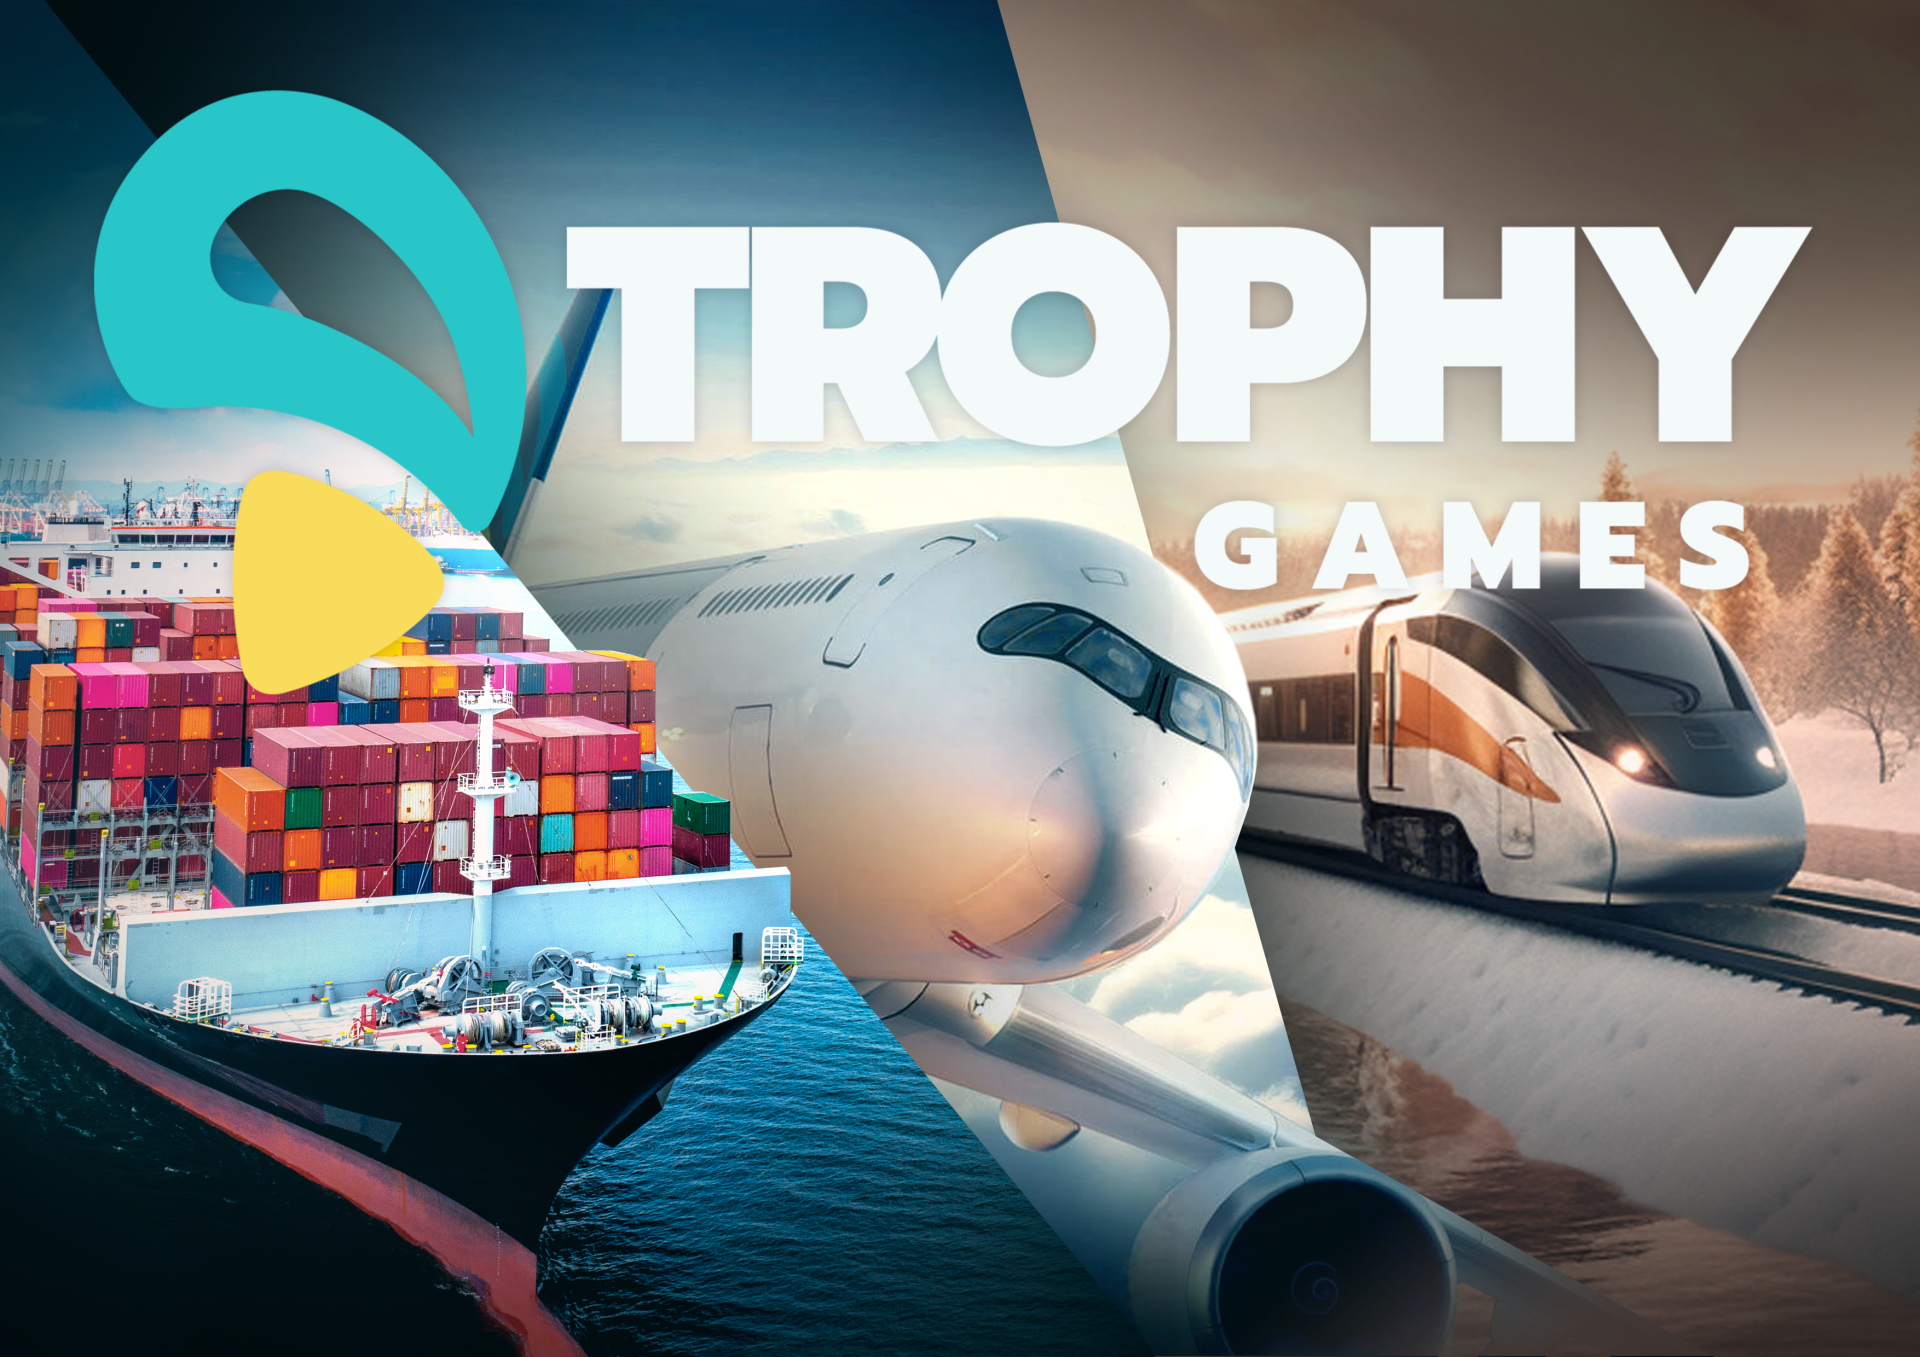 Trophy Games starter aktietilbagekøbsprogram